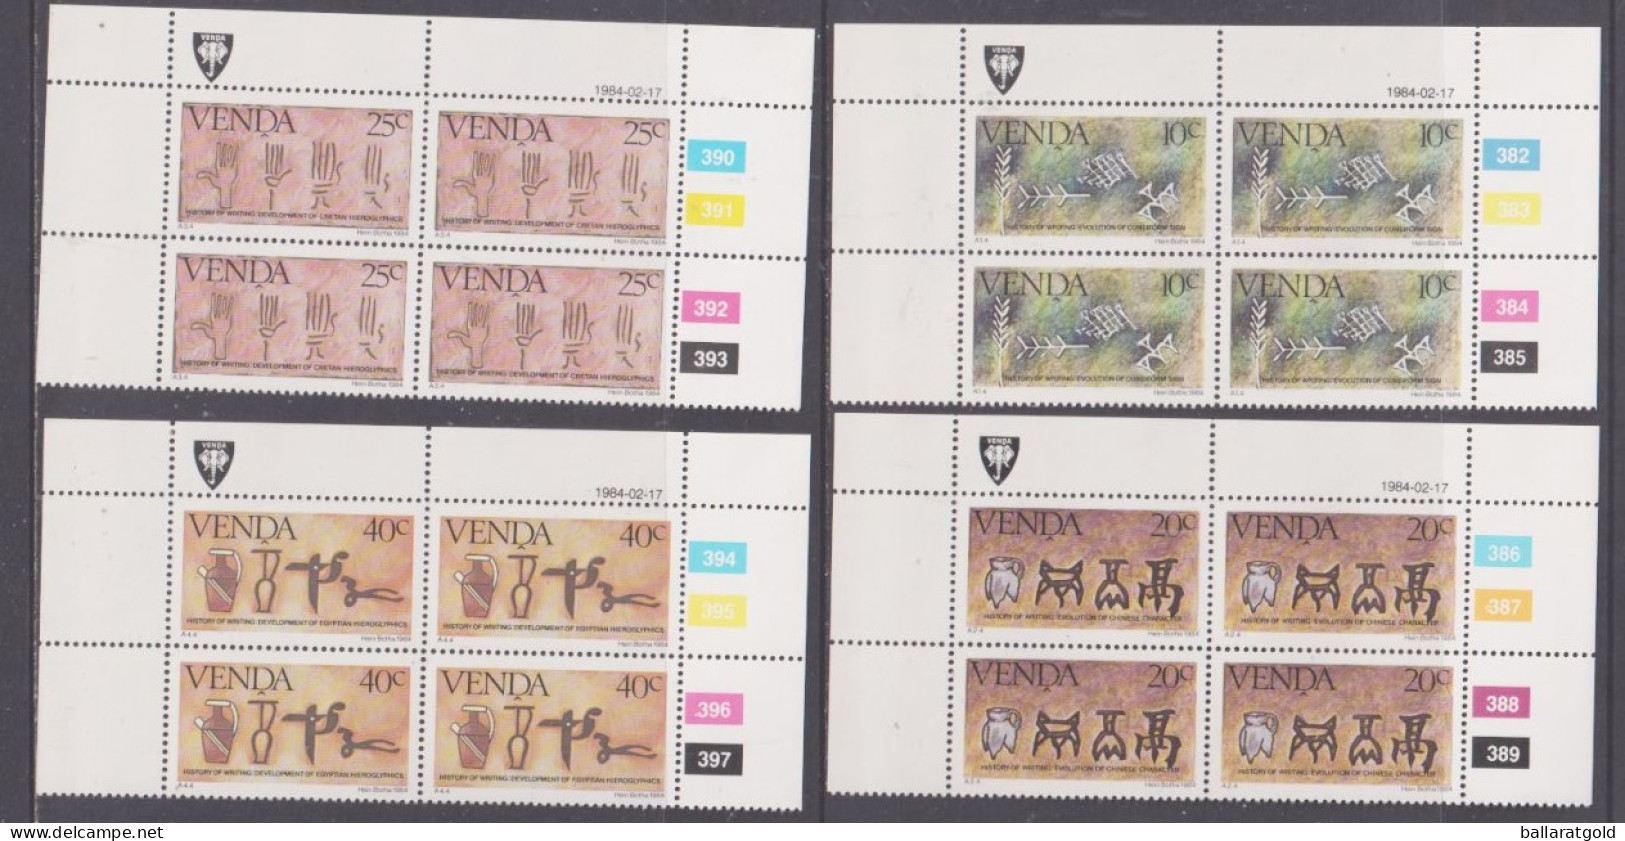 Venda 1984 History Of Writing Plated Blocks 4 MNH - Venda